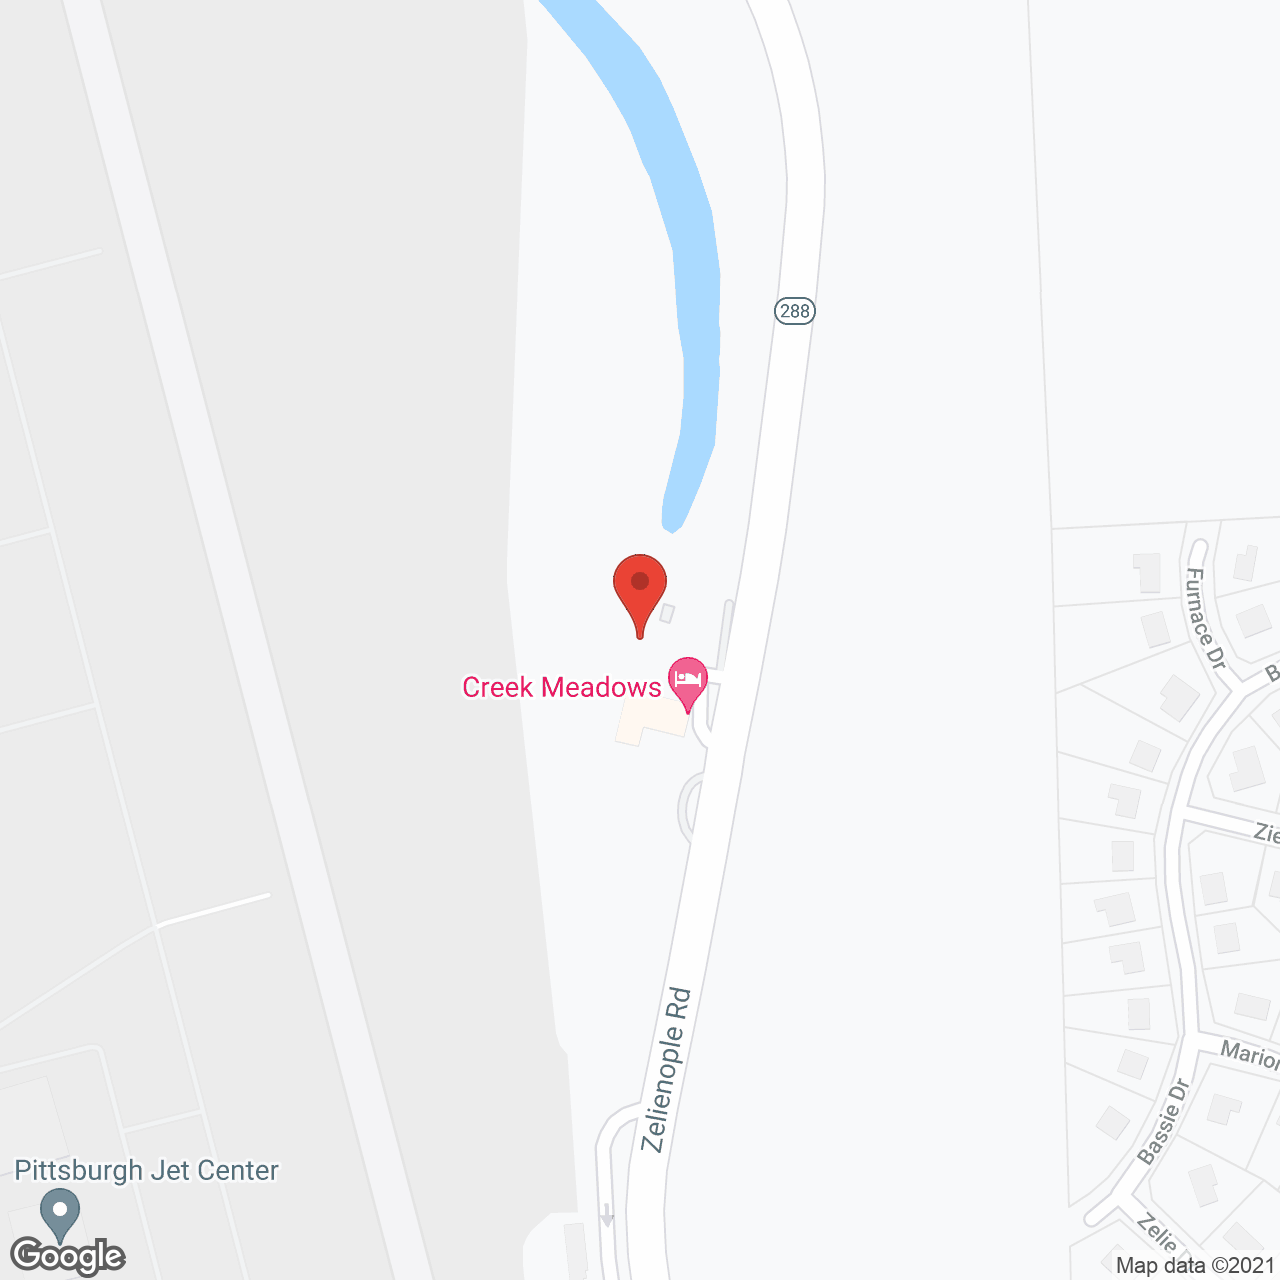 Creek Meadows in google map